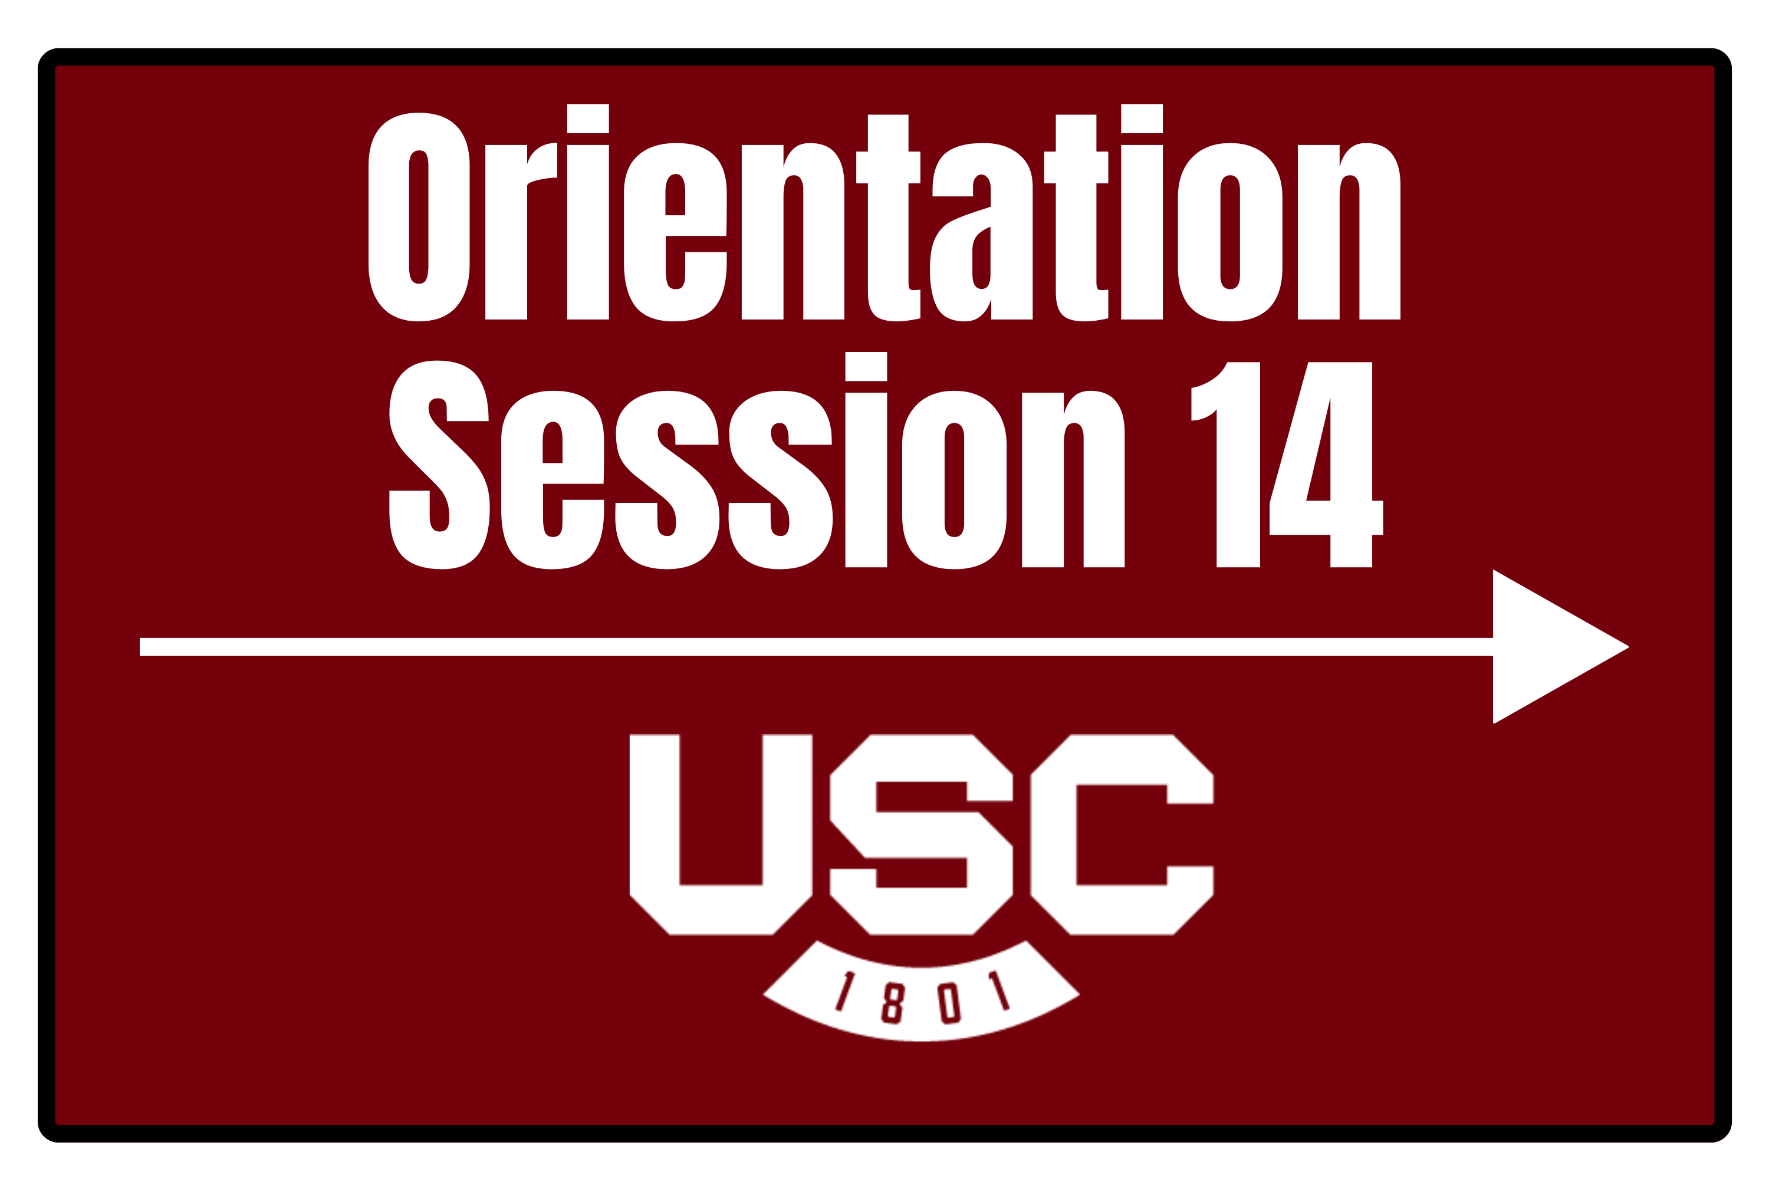 Orientation Session 14: July 15 - 16